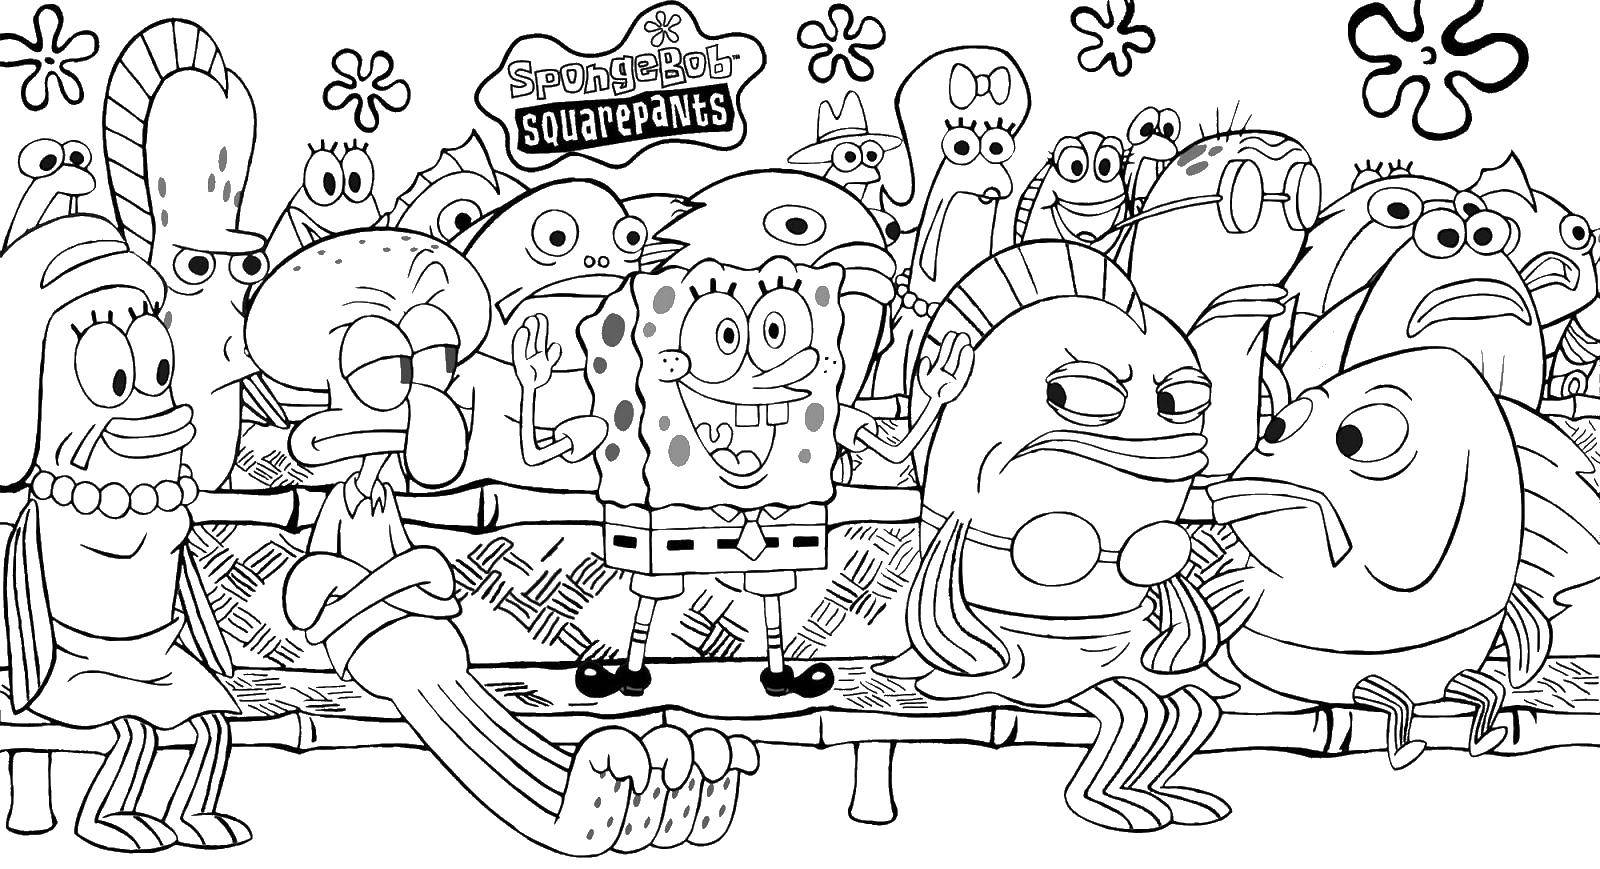 Coloring Spongebob Squarepants and his friends. Category Spongebob. Tags:  the spongebob, Patrick.